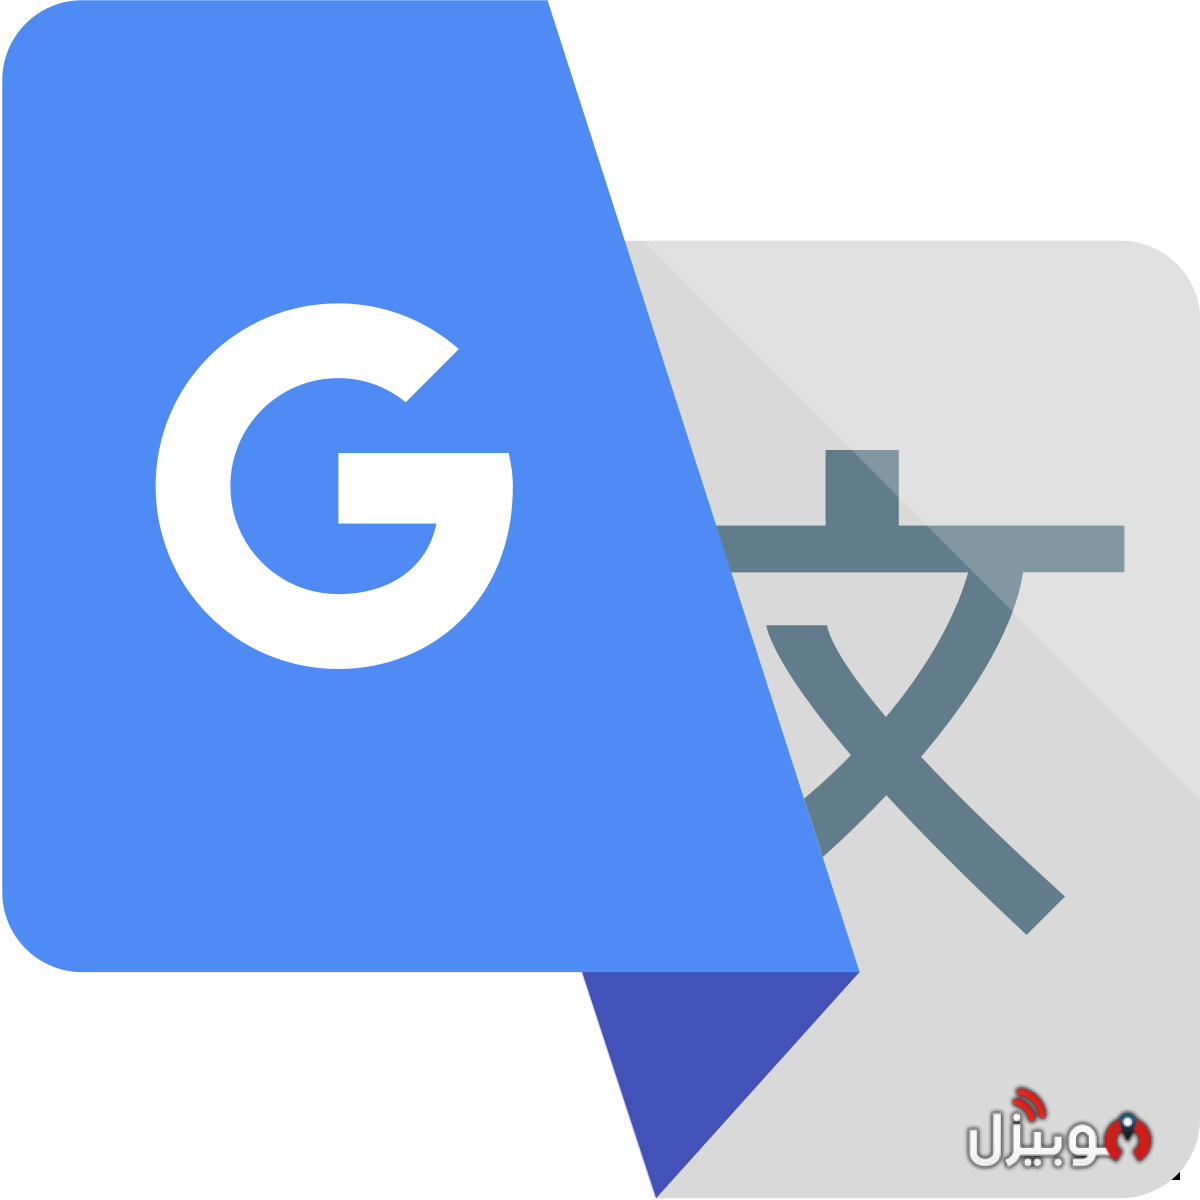 google translate app iphone